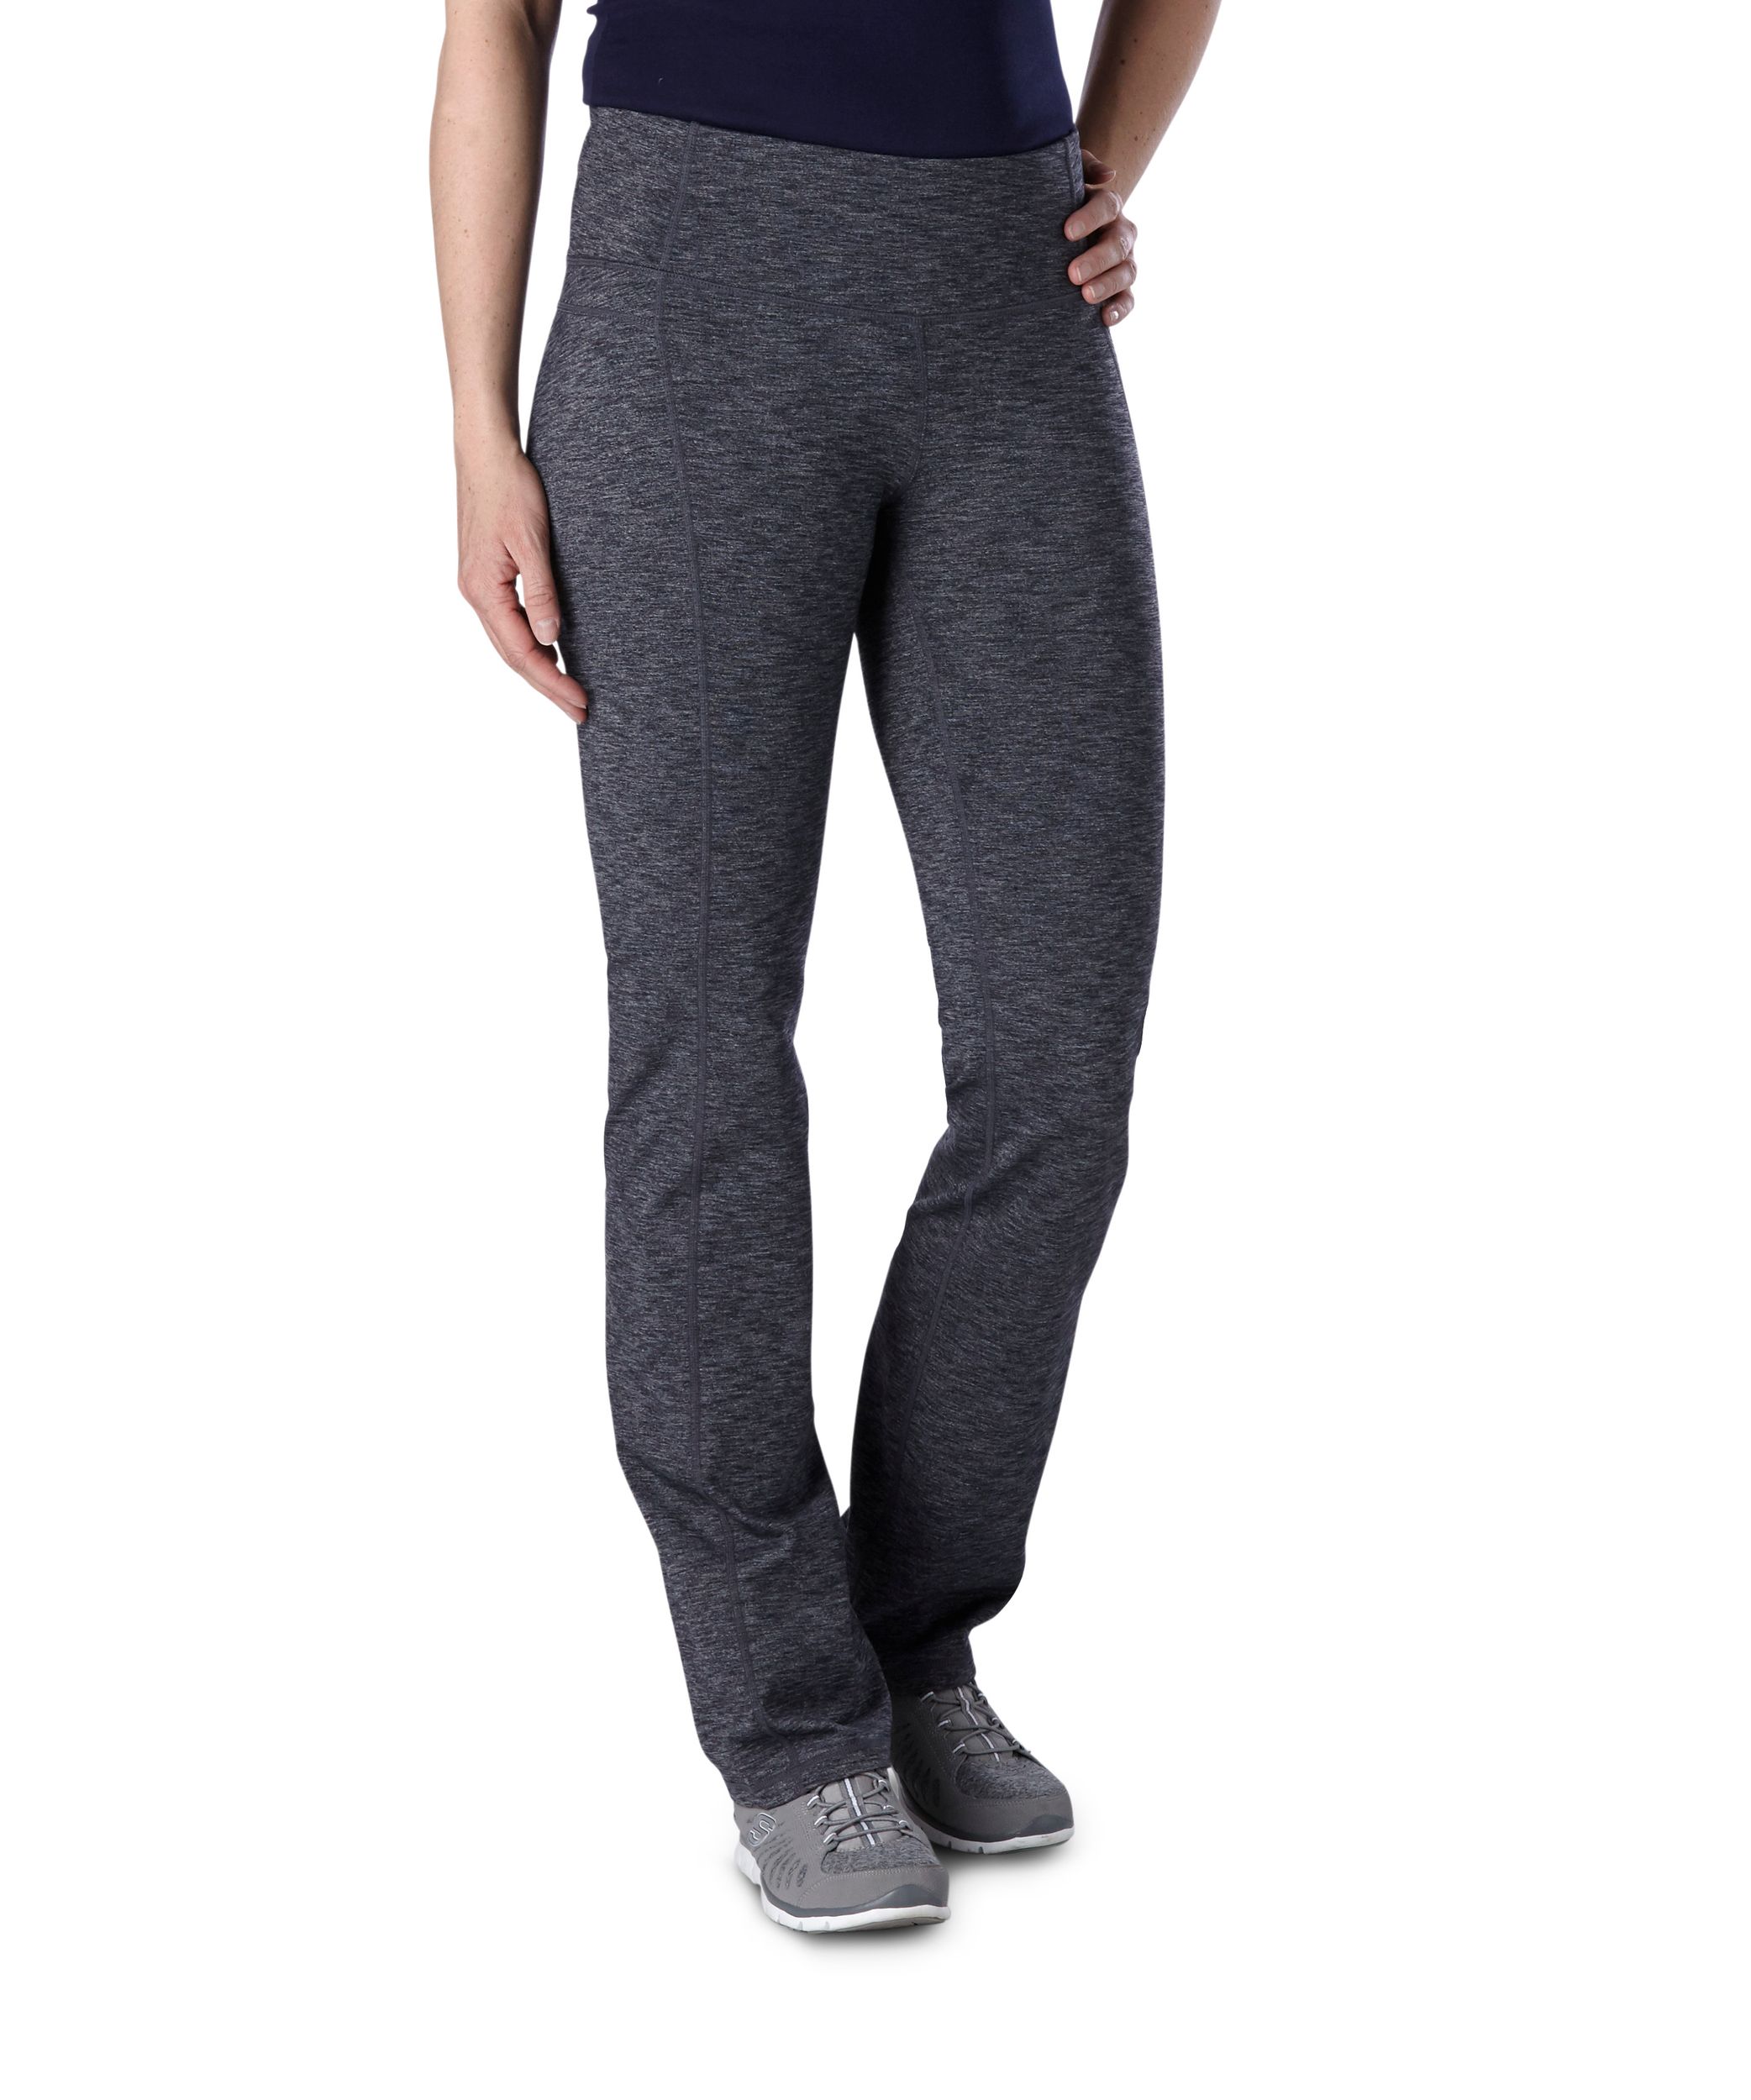 Anti Cellulite Slimming Capri Pants + Silver - Black Size XS, Pants -   Canada